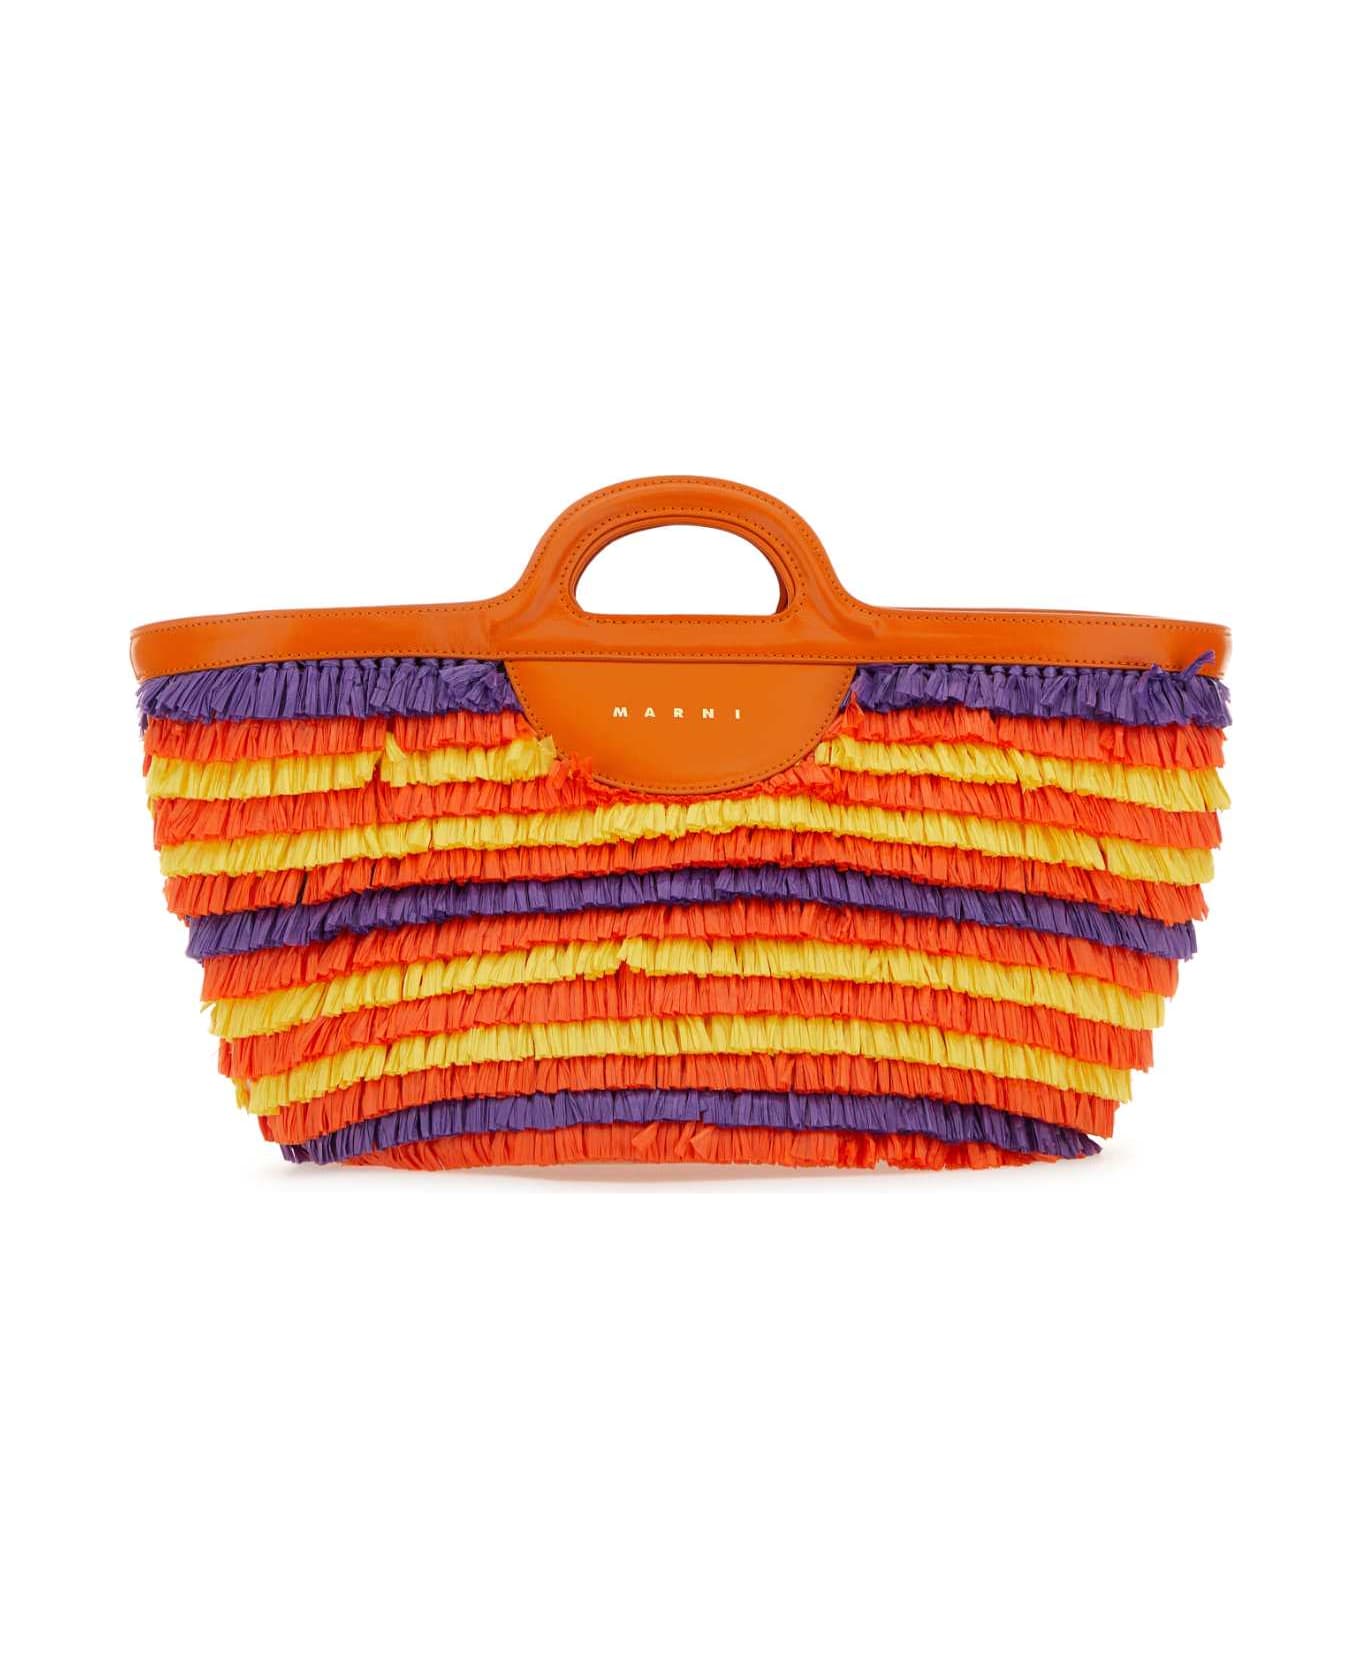 Marni Multicolor Fabric Tropicalia Summer Handbag - CARROTYELLOWVIOLET